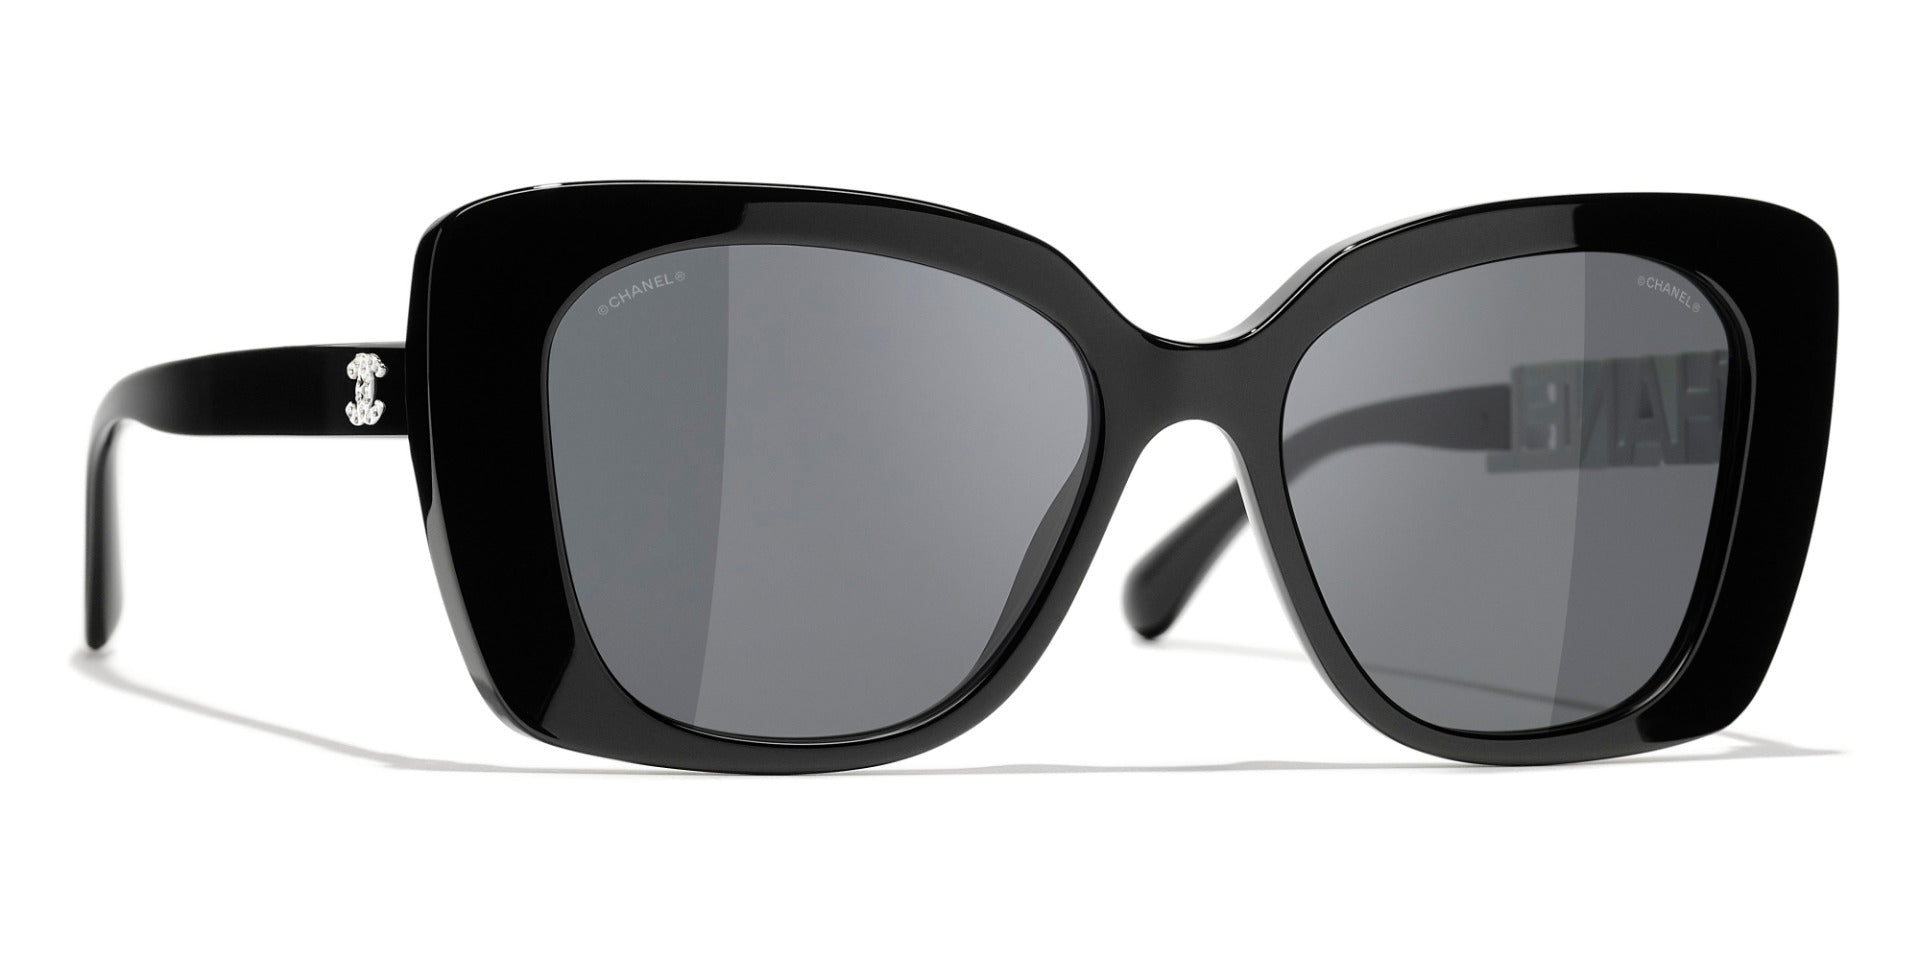 CHANEL Rectangle Sunglasses  Chanel glasses, Sunglasses, Chanel sunglasses